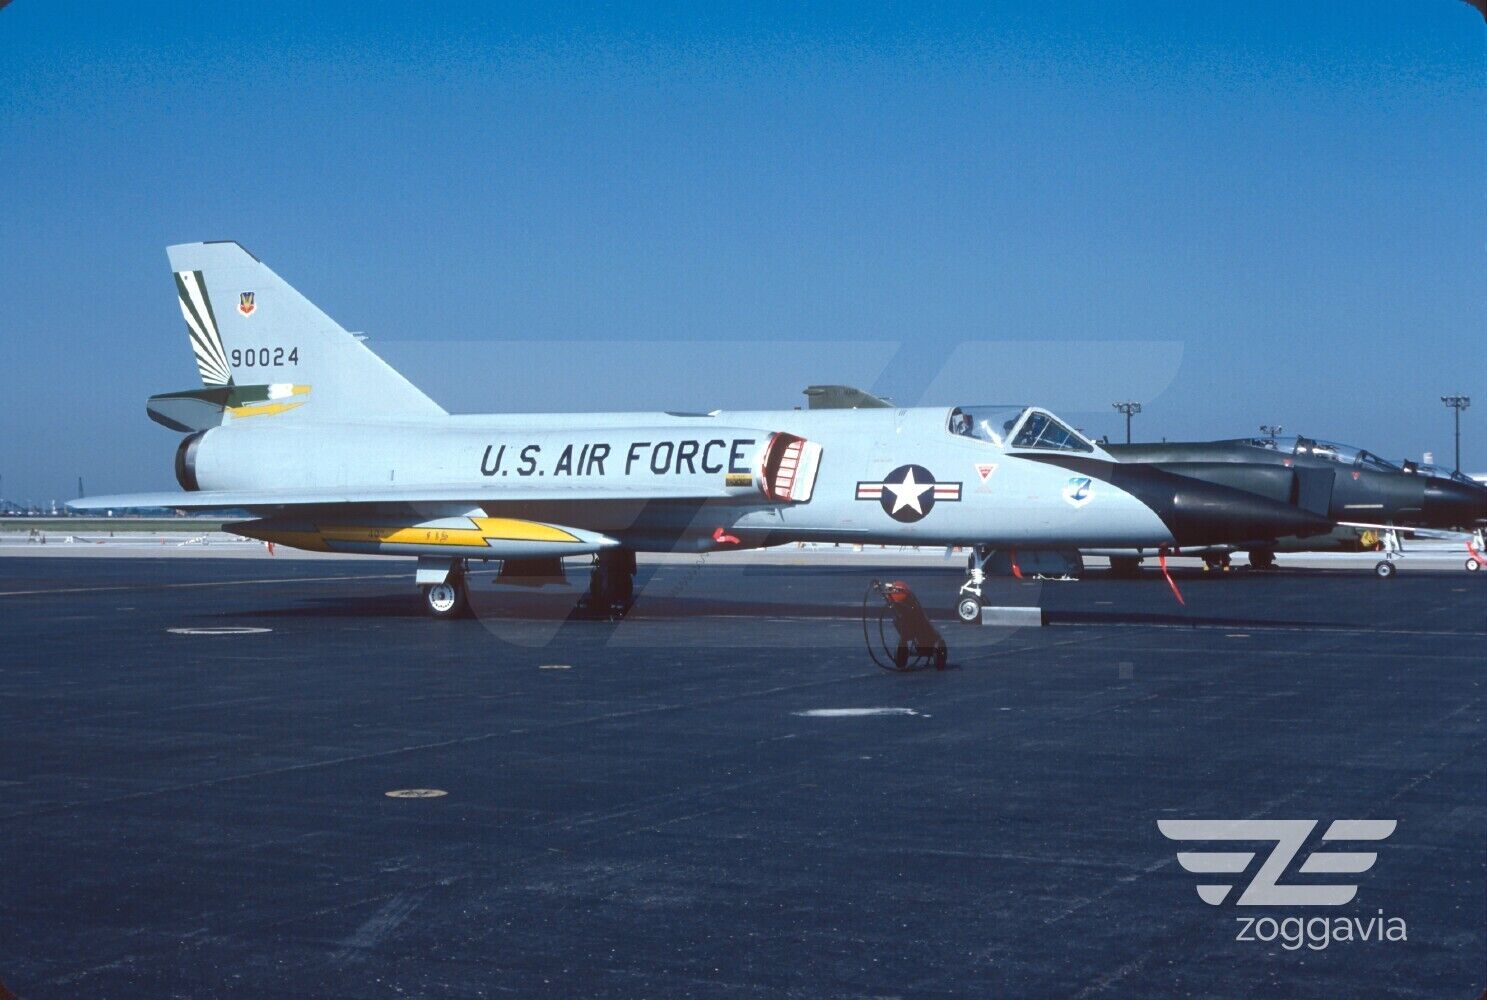 Aircraft Slide 59-0024 F-106 U.S. Air Force, USAF, 1985